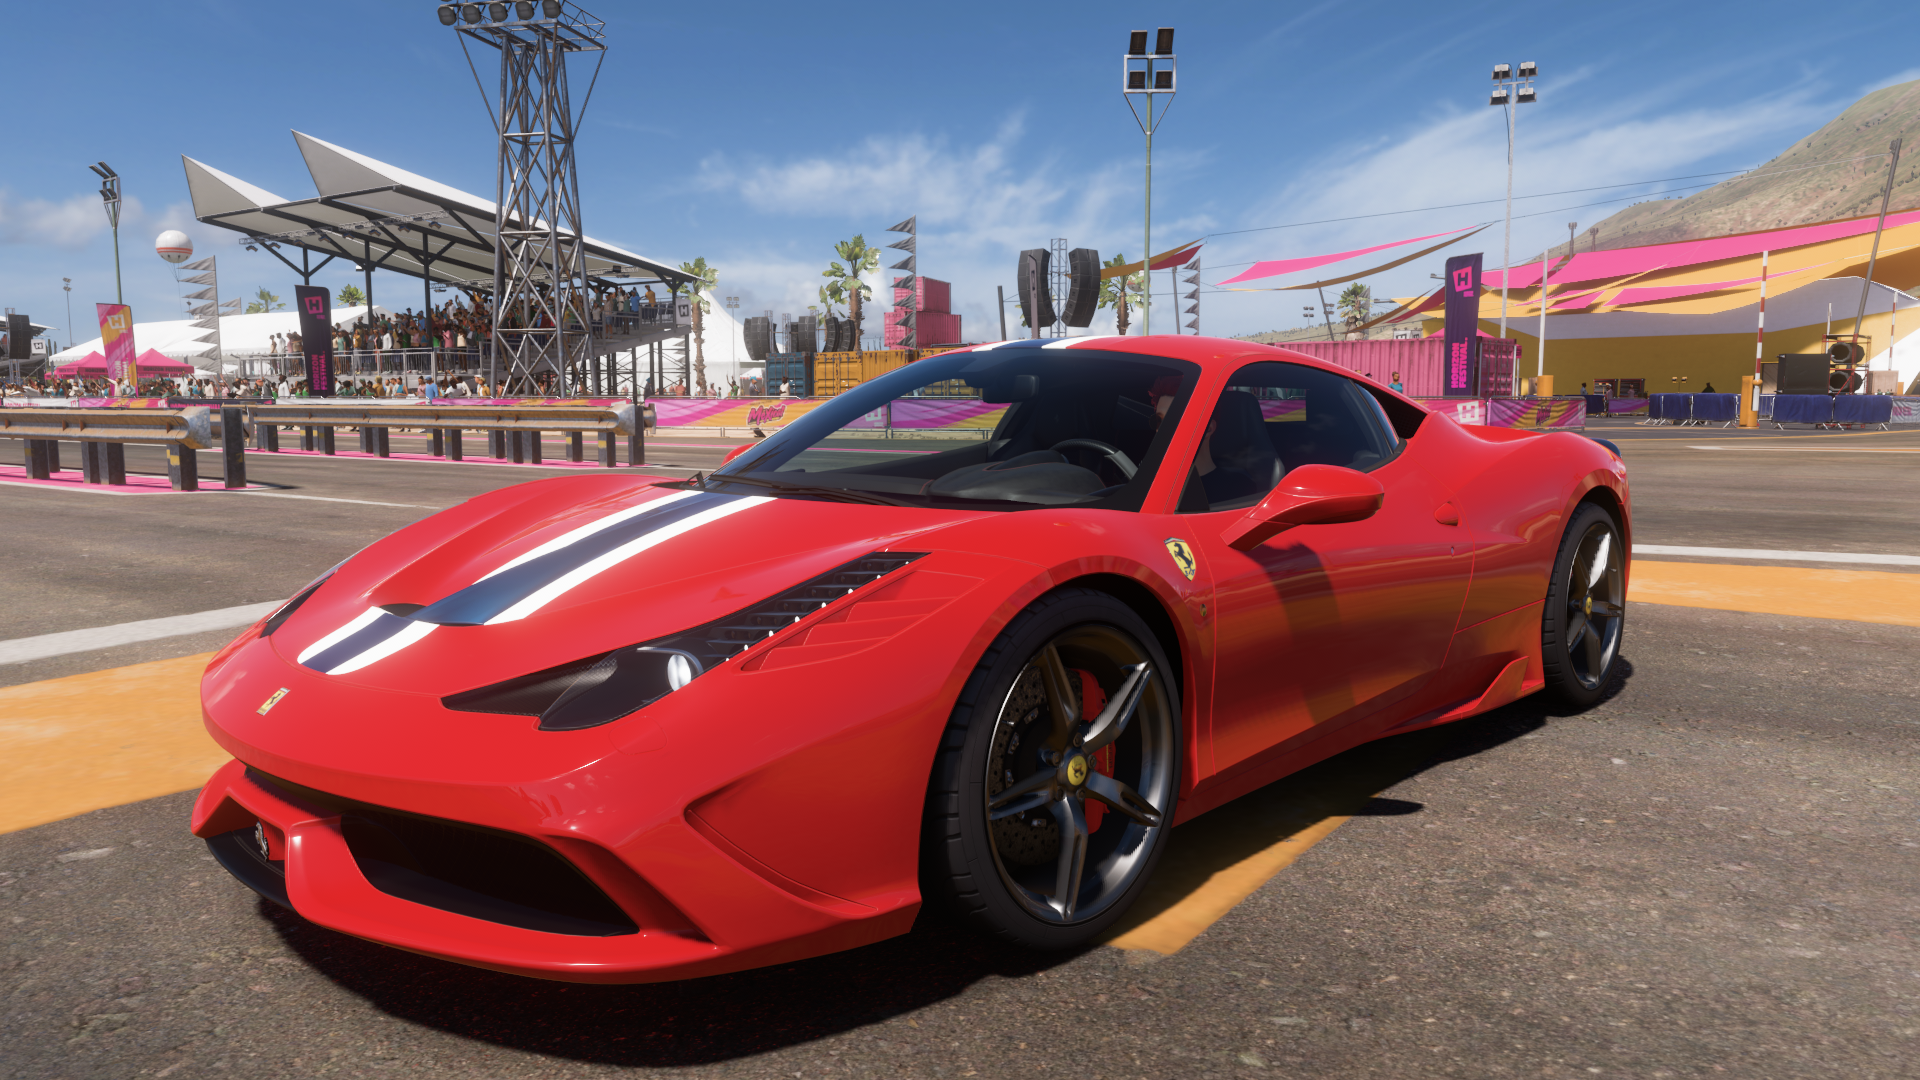 General 1920x1080 Forza Forza Horizon 5 xbox series S Ferrari sports car italian cars video games